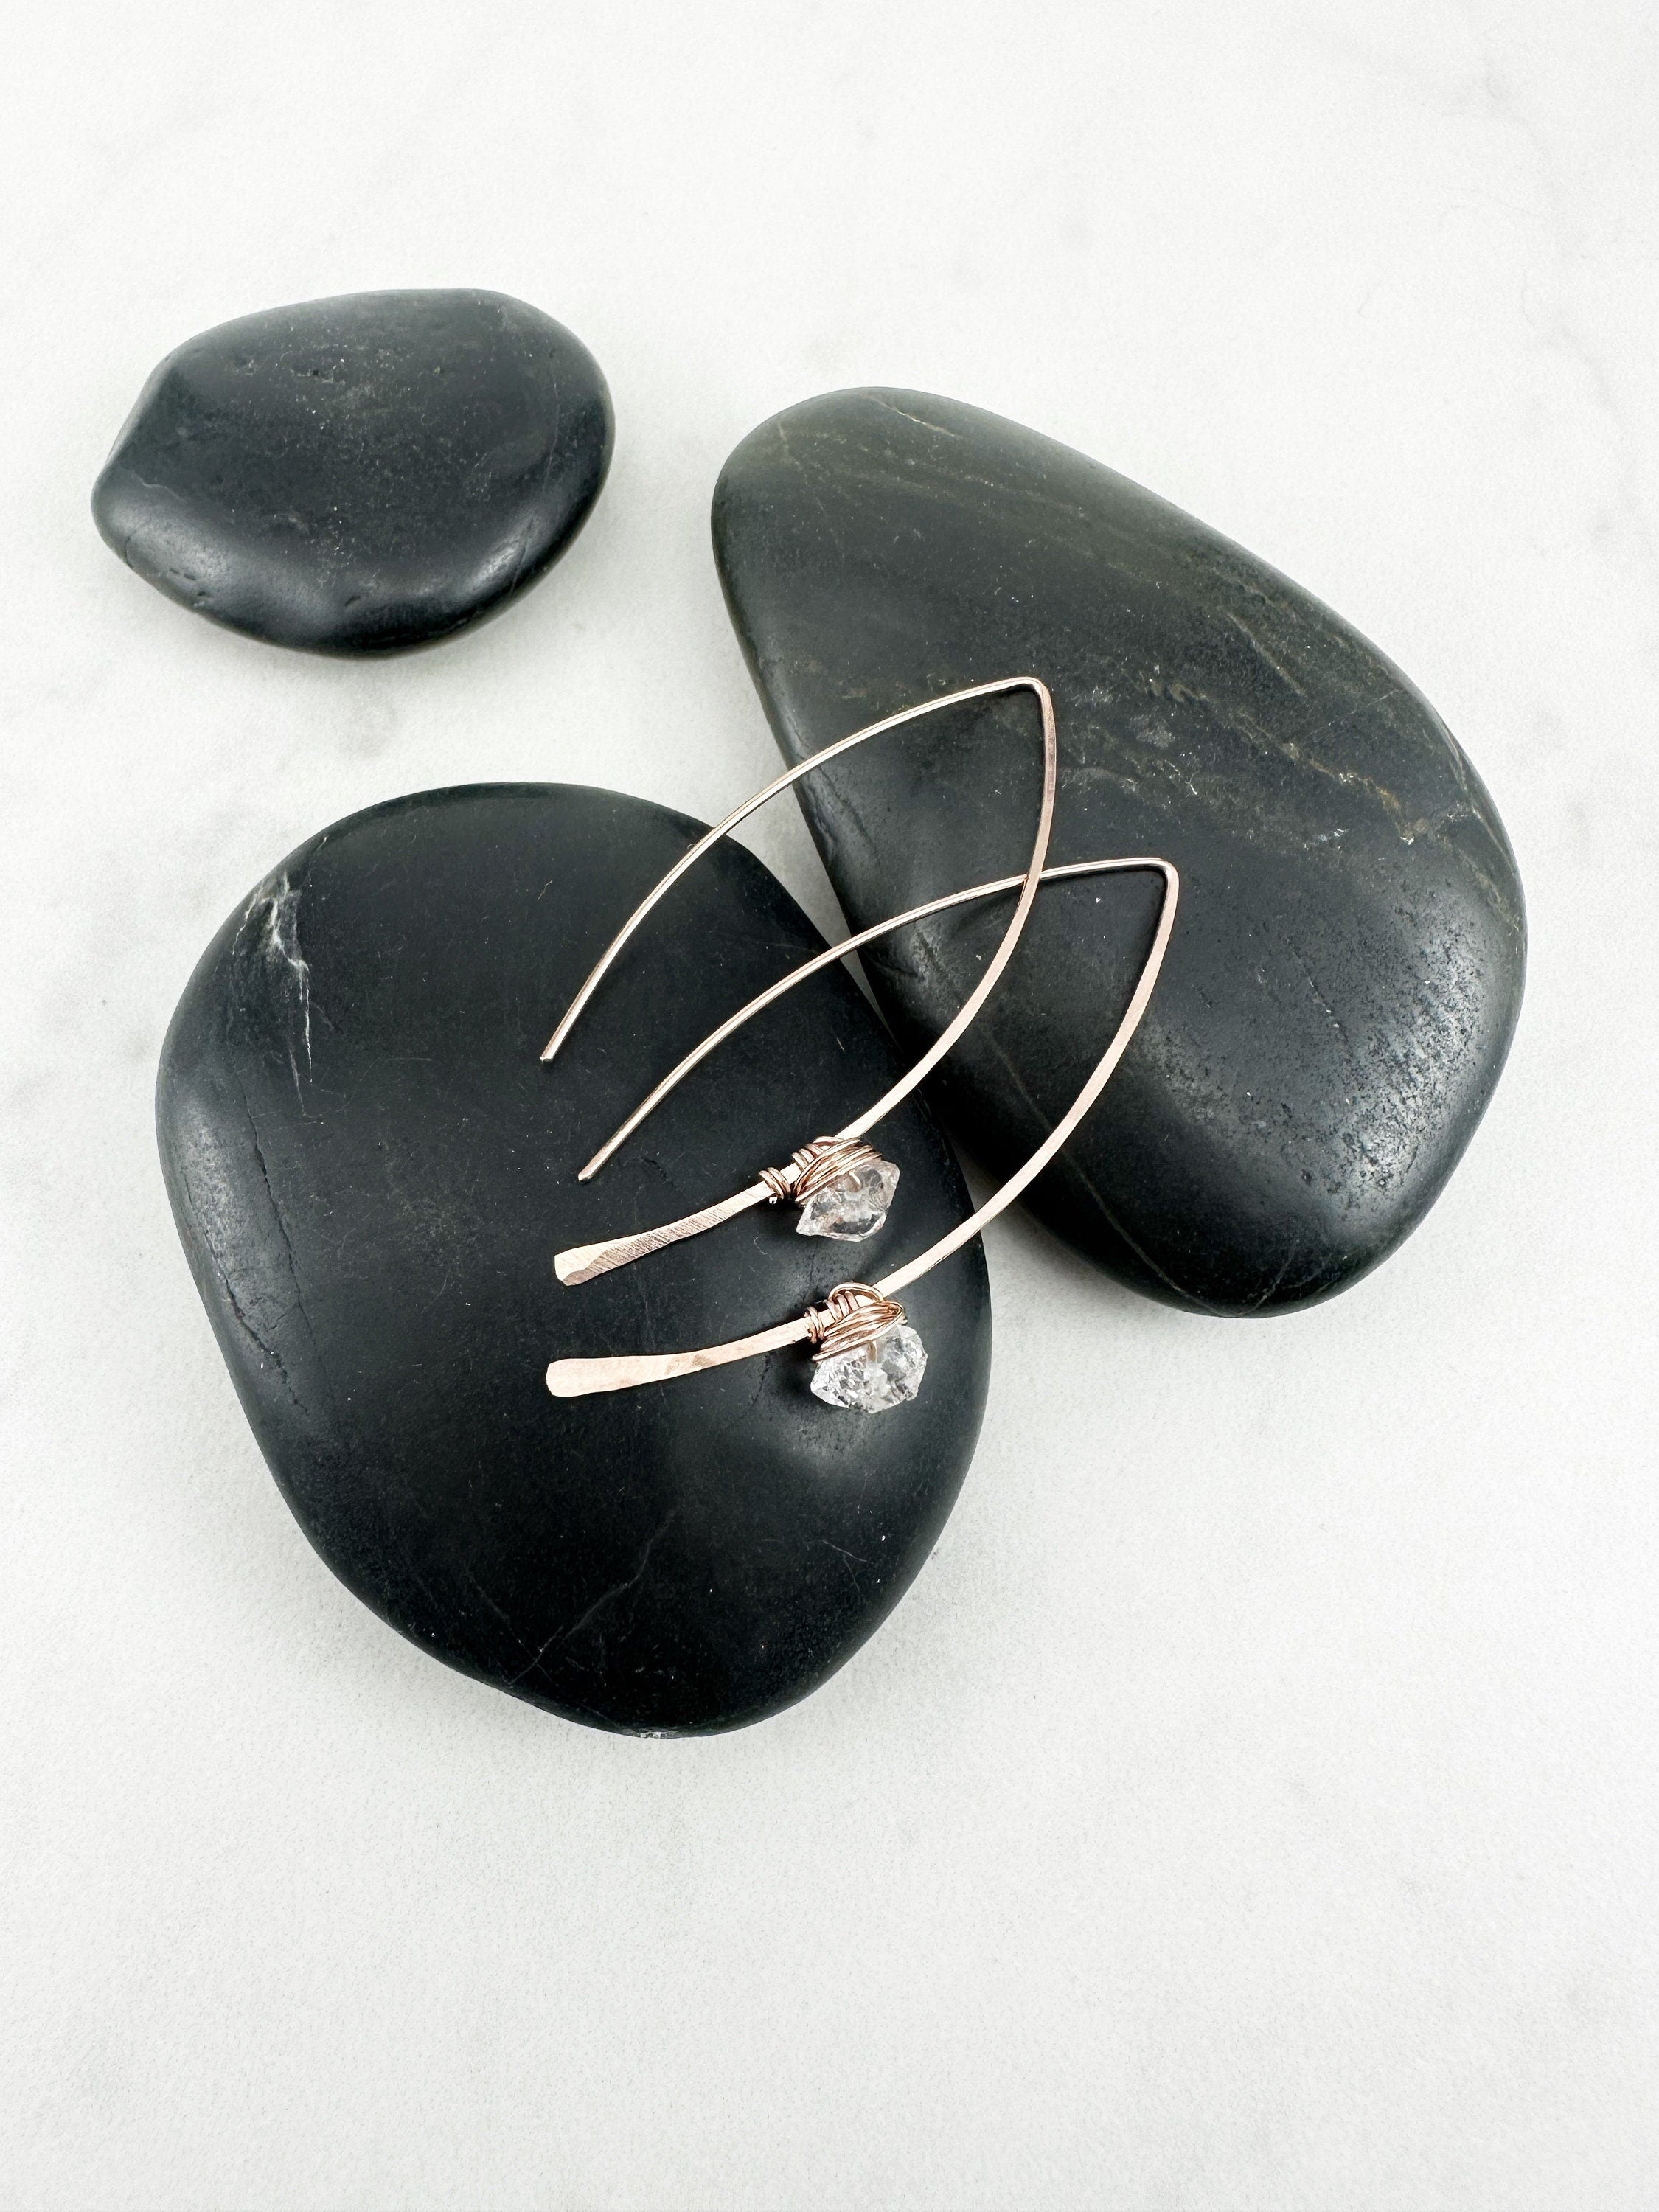 Hammered Rose Gold Threader Earrings with Herkimer Diamonds, minimalist earrings, delicate earrings, rose gold earrings, open hoops